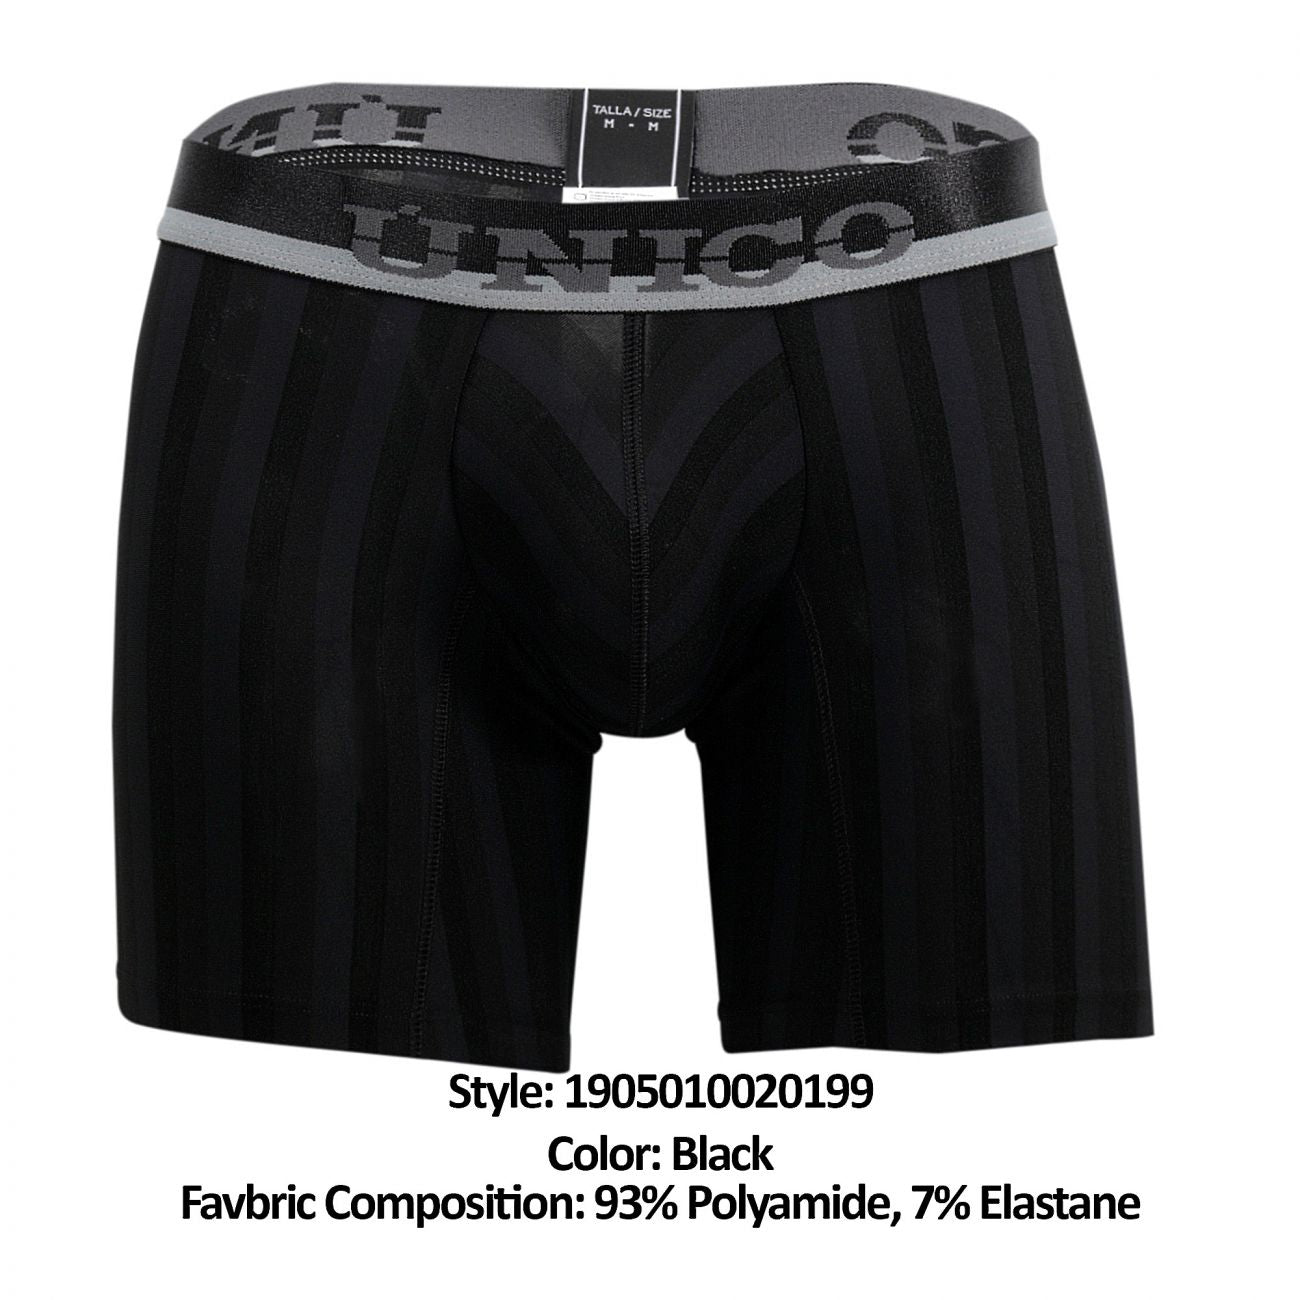 Unico 1905010020199 Boxer Briefs Azabache Black